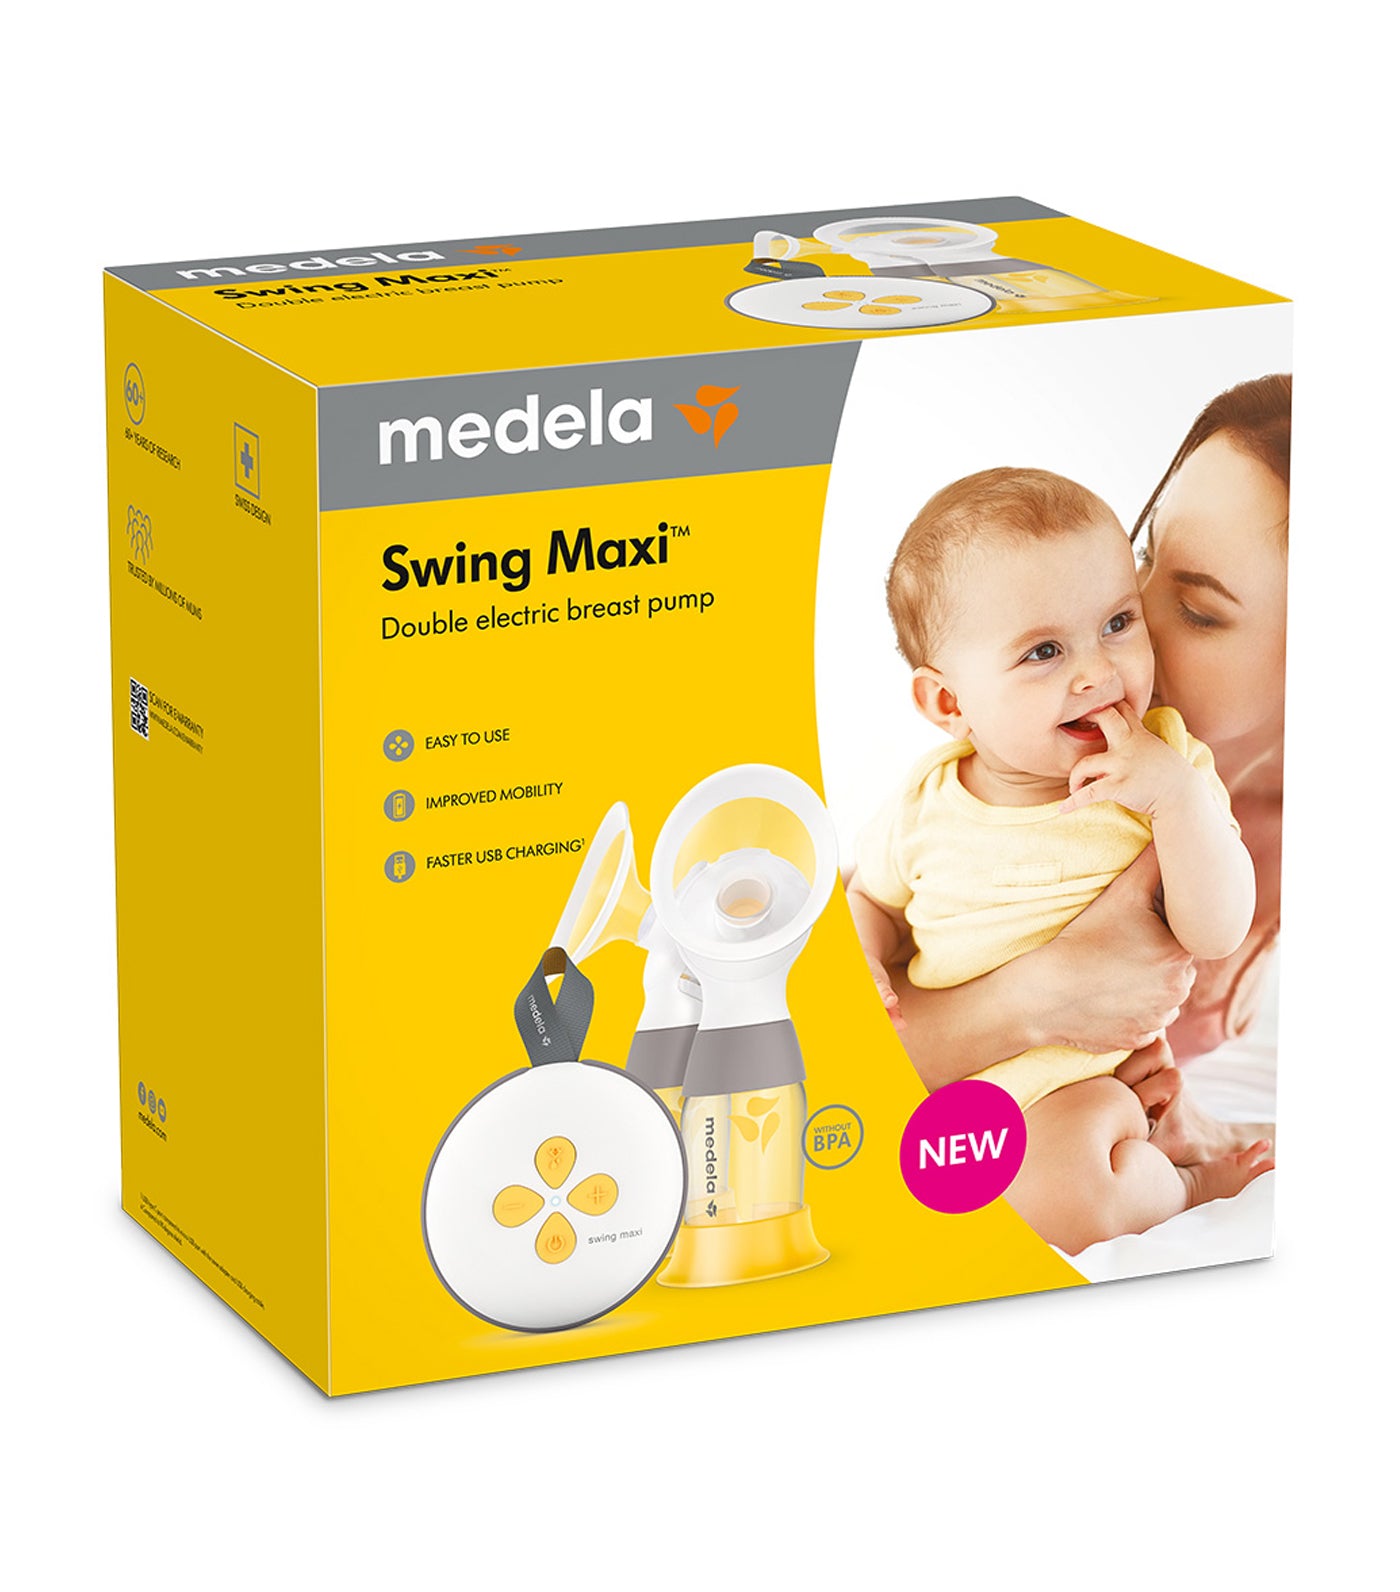 medela swing maxi 2.0 double electric breast pump